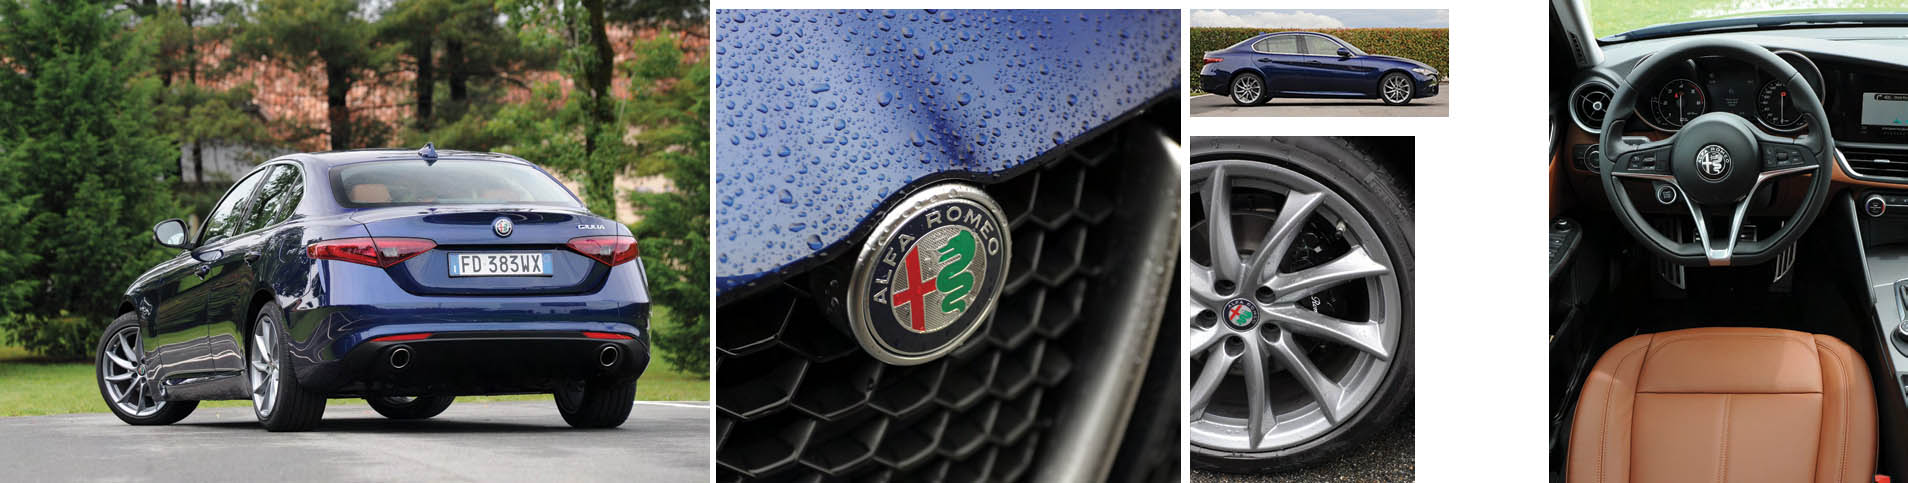 2016 Alfa Romeo Giulia First drive